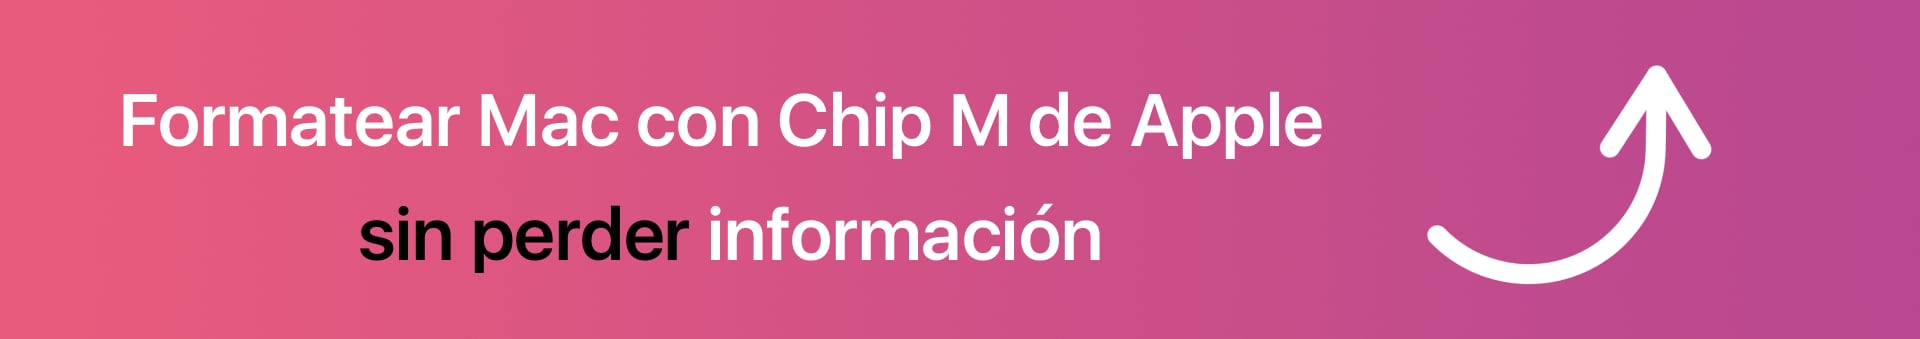 Formatear Mac Chip M